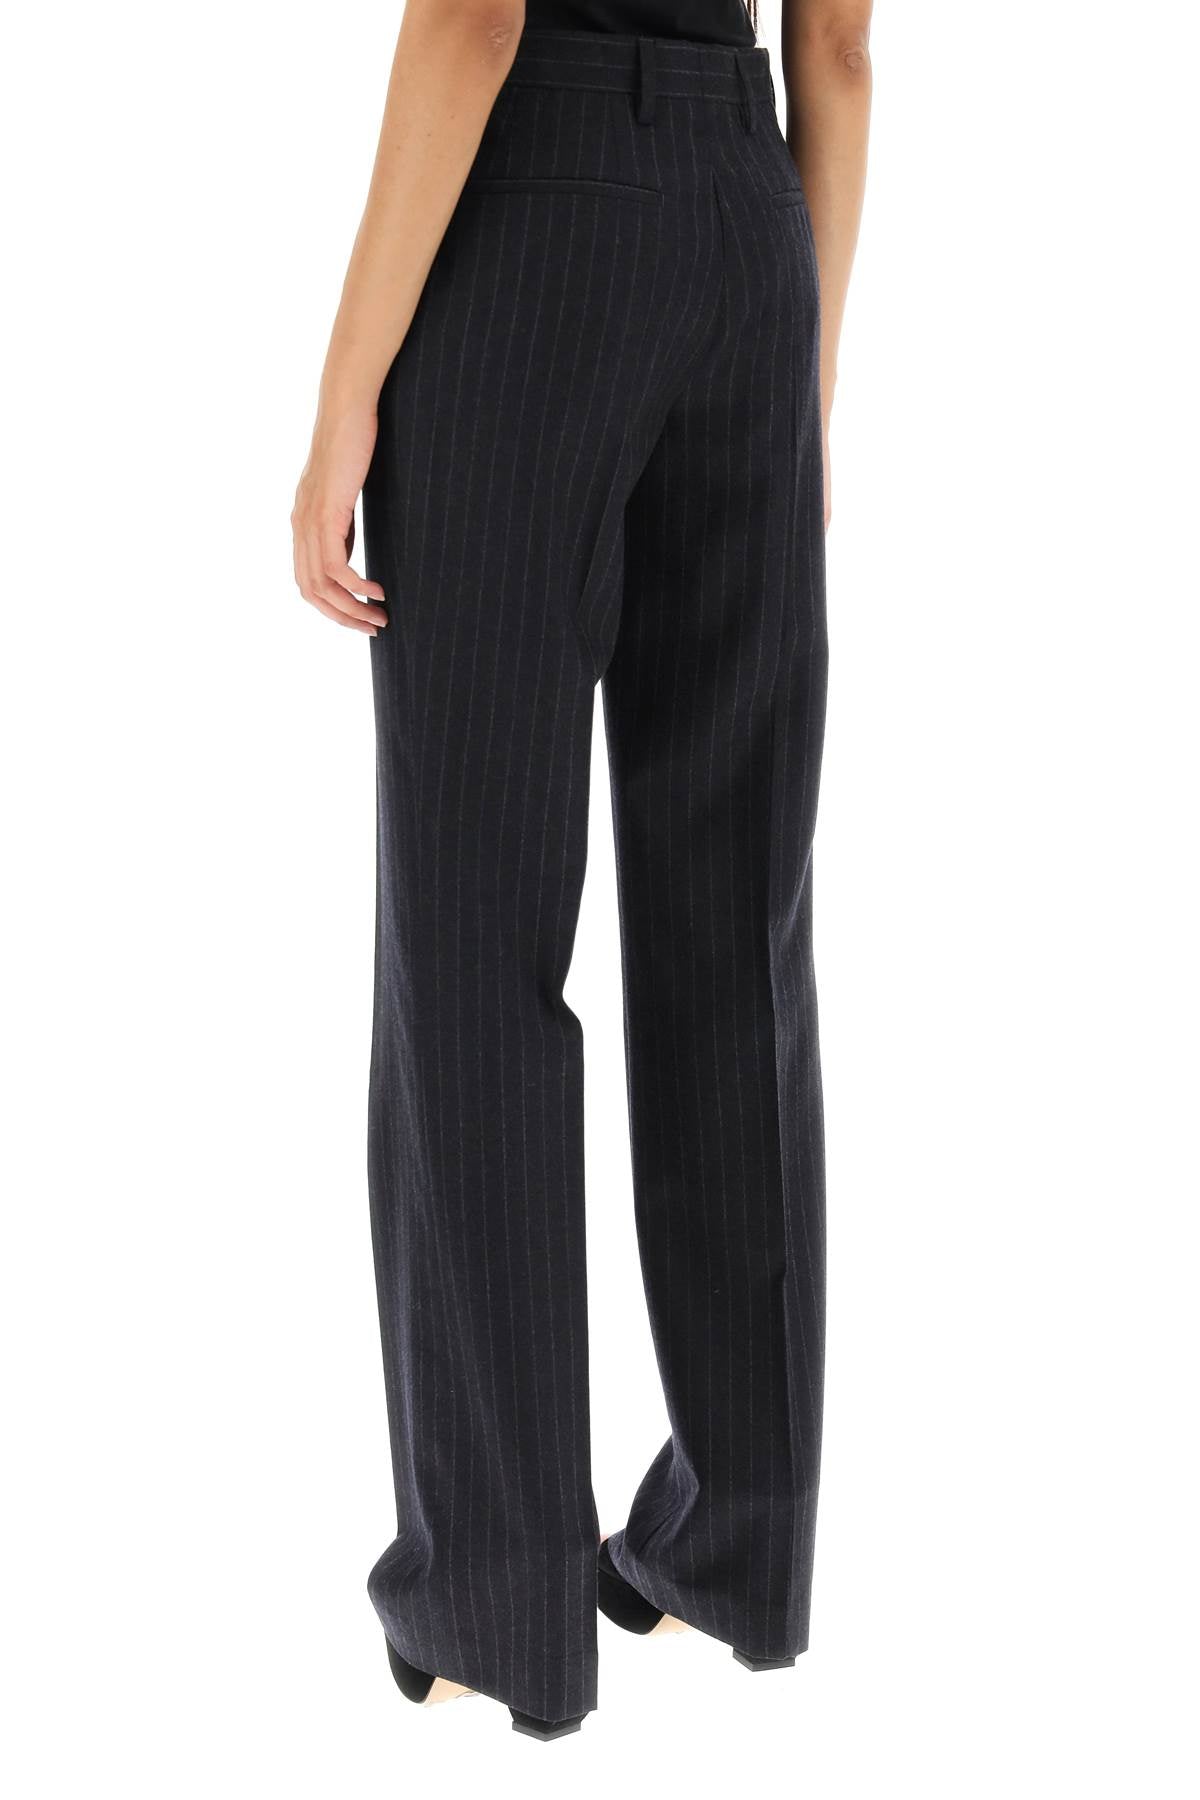 Dries Van Noten pinstripe flannel parchia trousers PARCHIA7180901